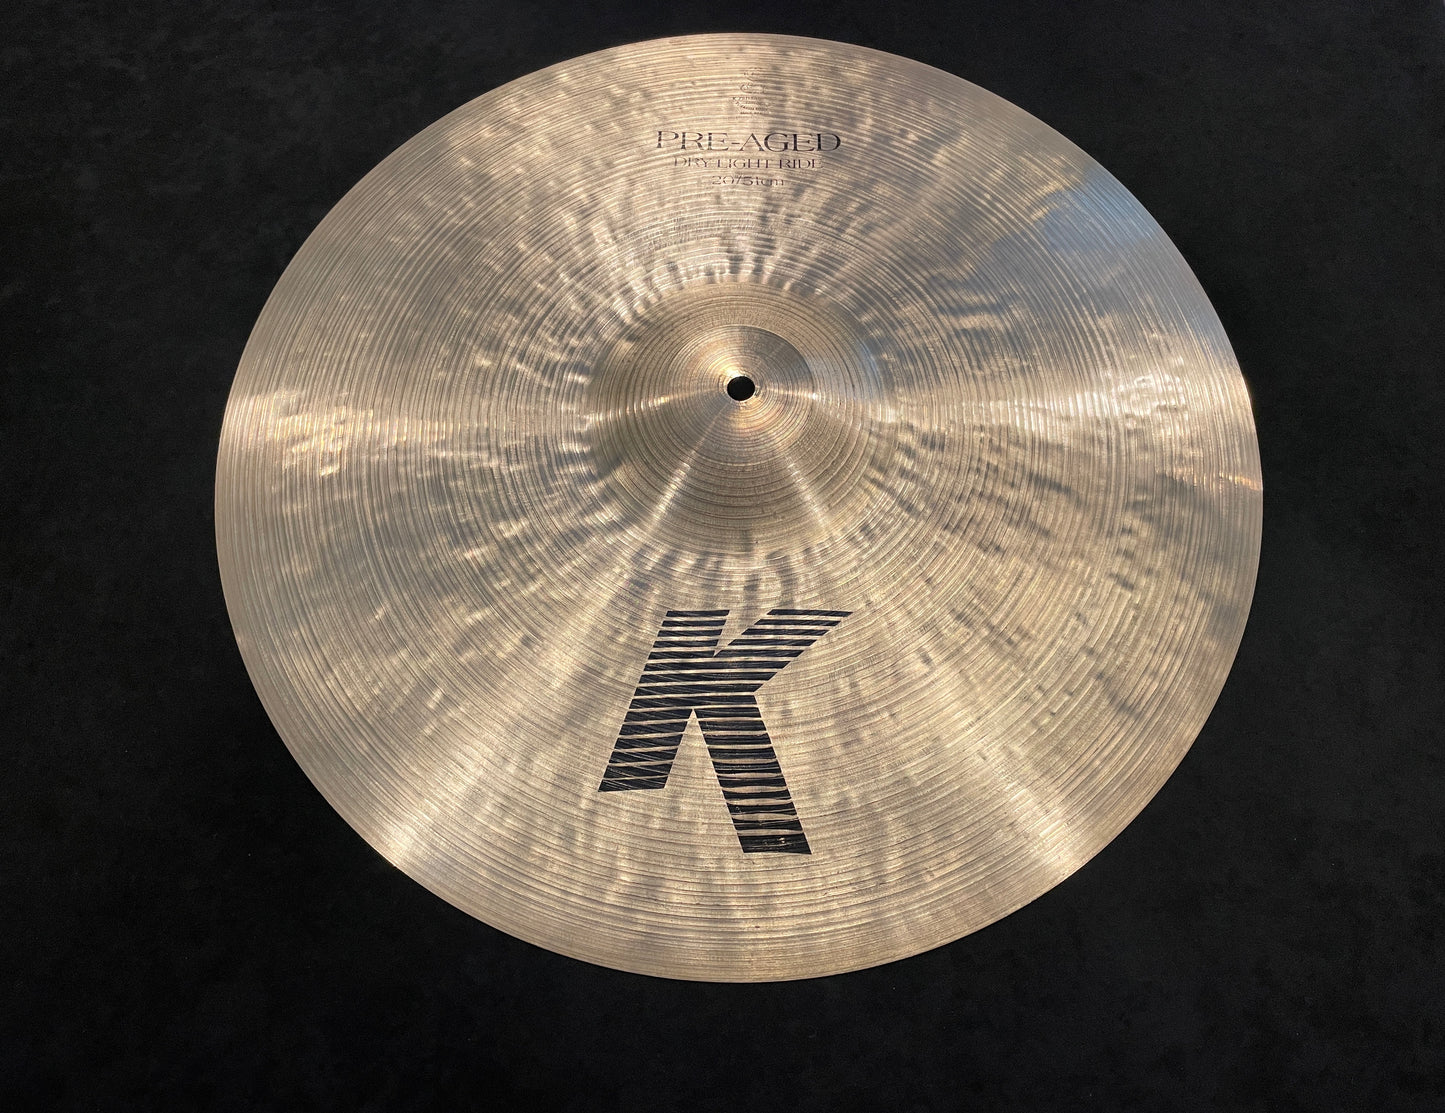 20" Zildjian K Pre-Aged Dry Light Ride Cymbal 2056g *Video Demo*